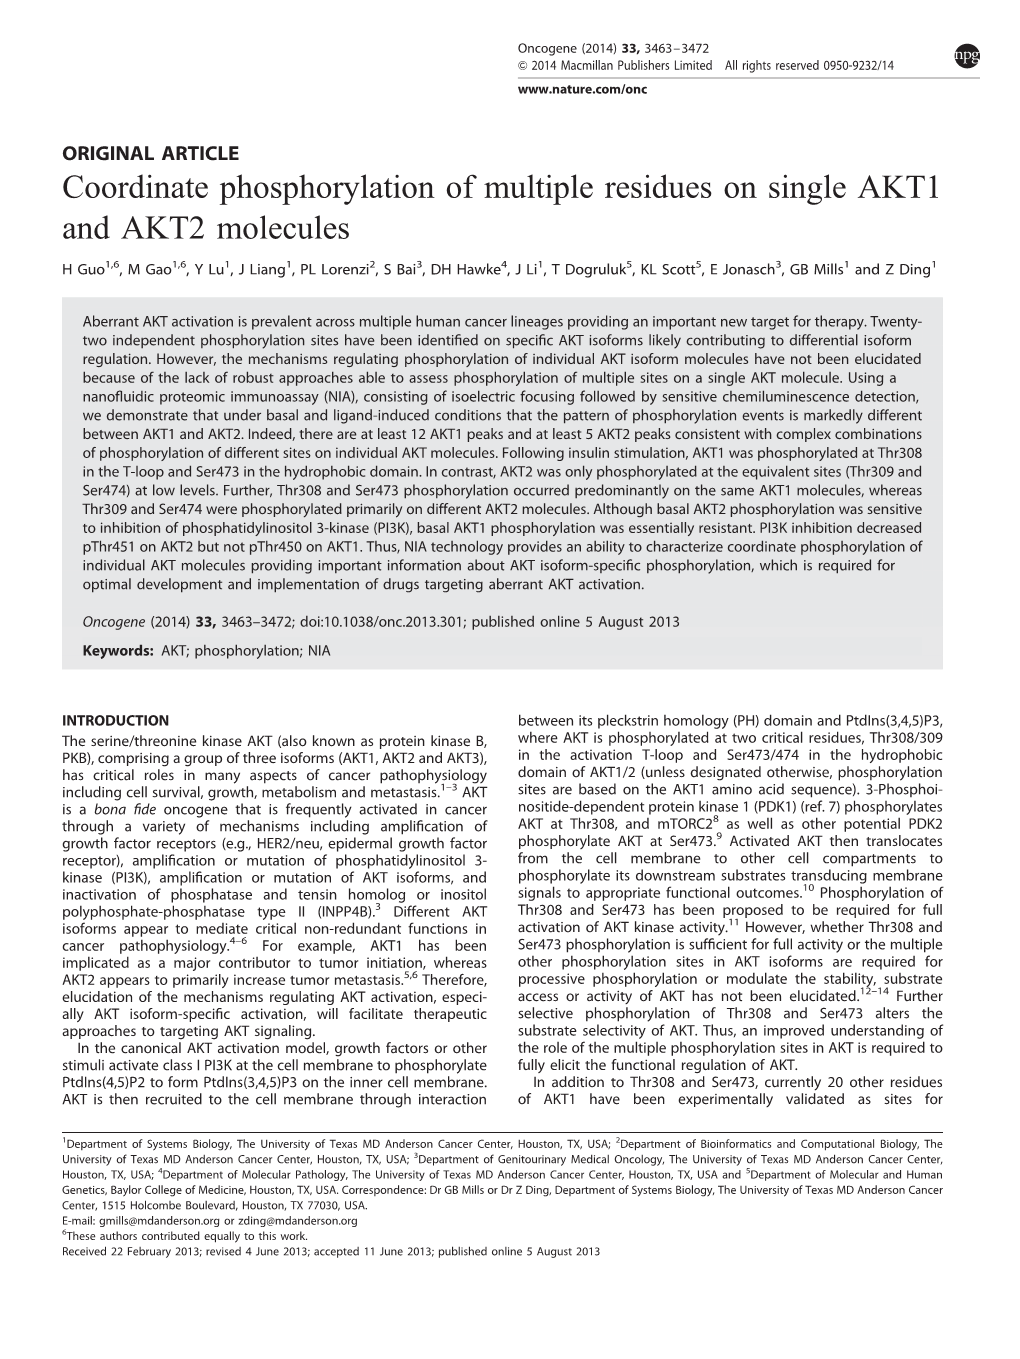 Coordinate Phosphorylation of Multiple Residues on Single AKT1 and AKT2 Molecules